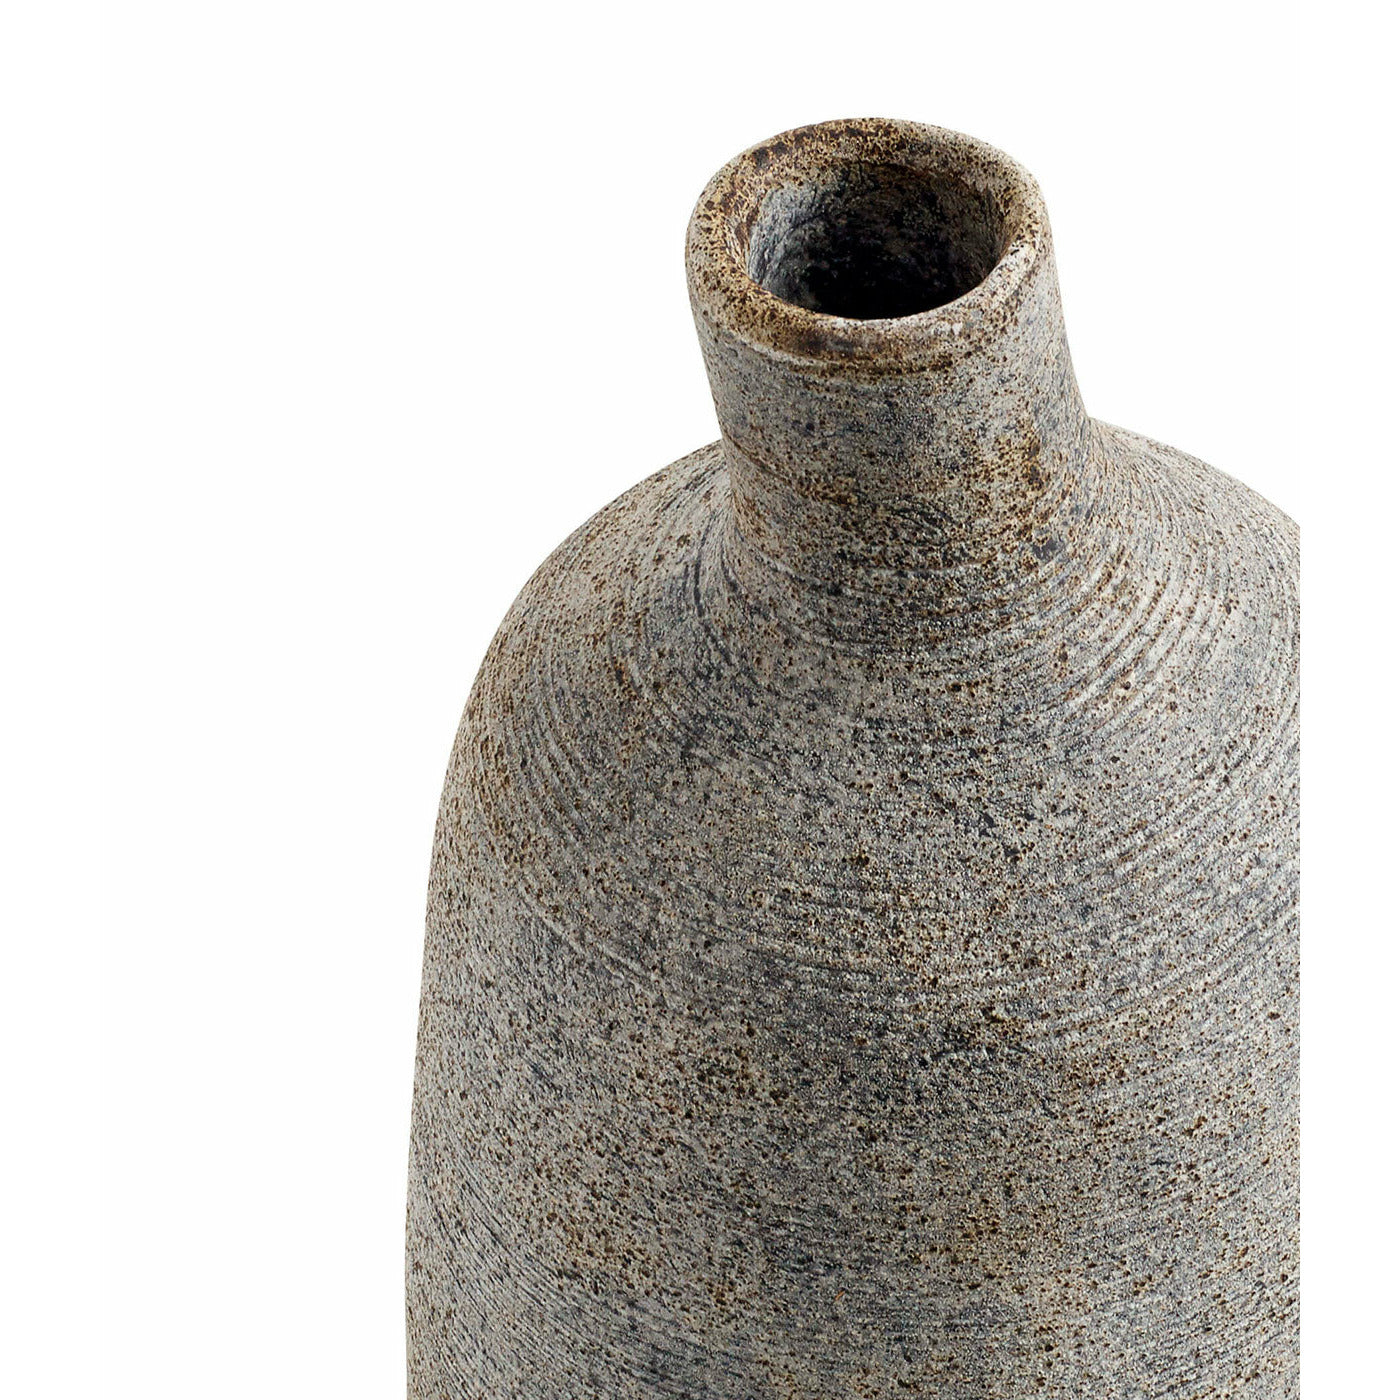 Muubs Vase Stain Large - Gråbrun - Terracotta - H: 26 Ø: 14,5 cm - DesignGaragen.dk.